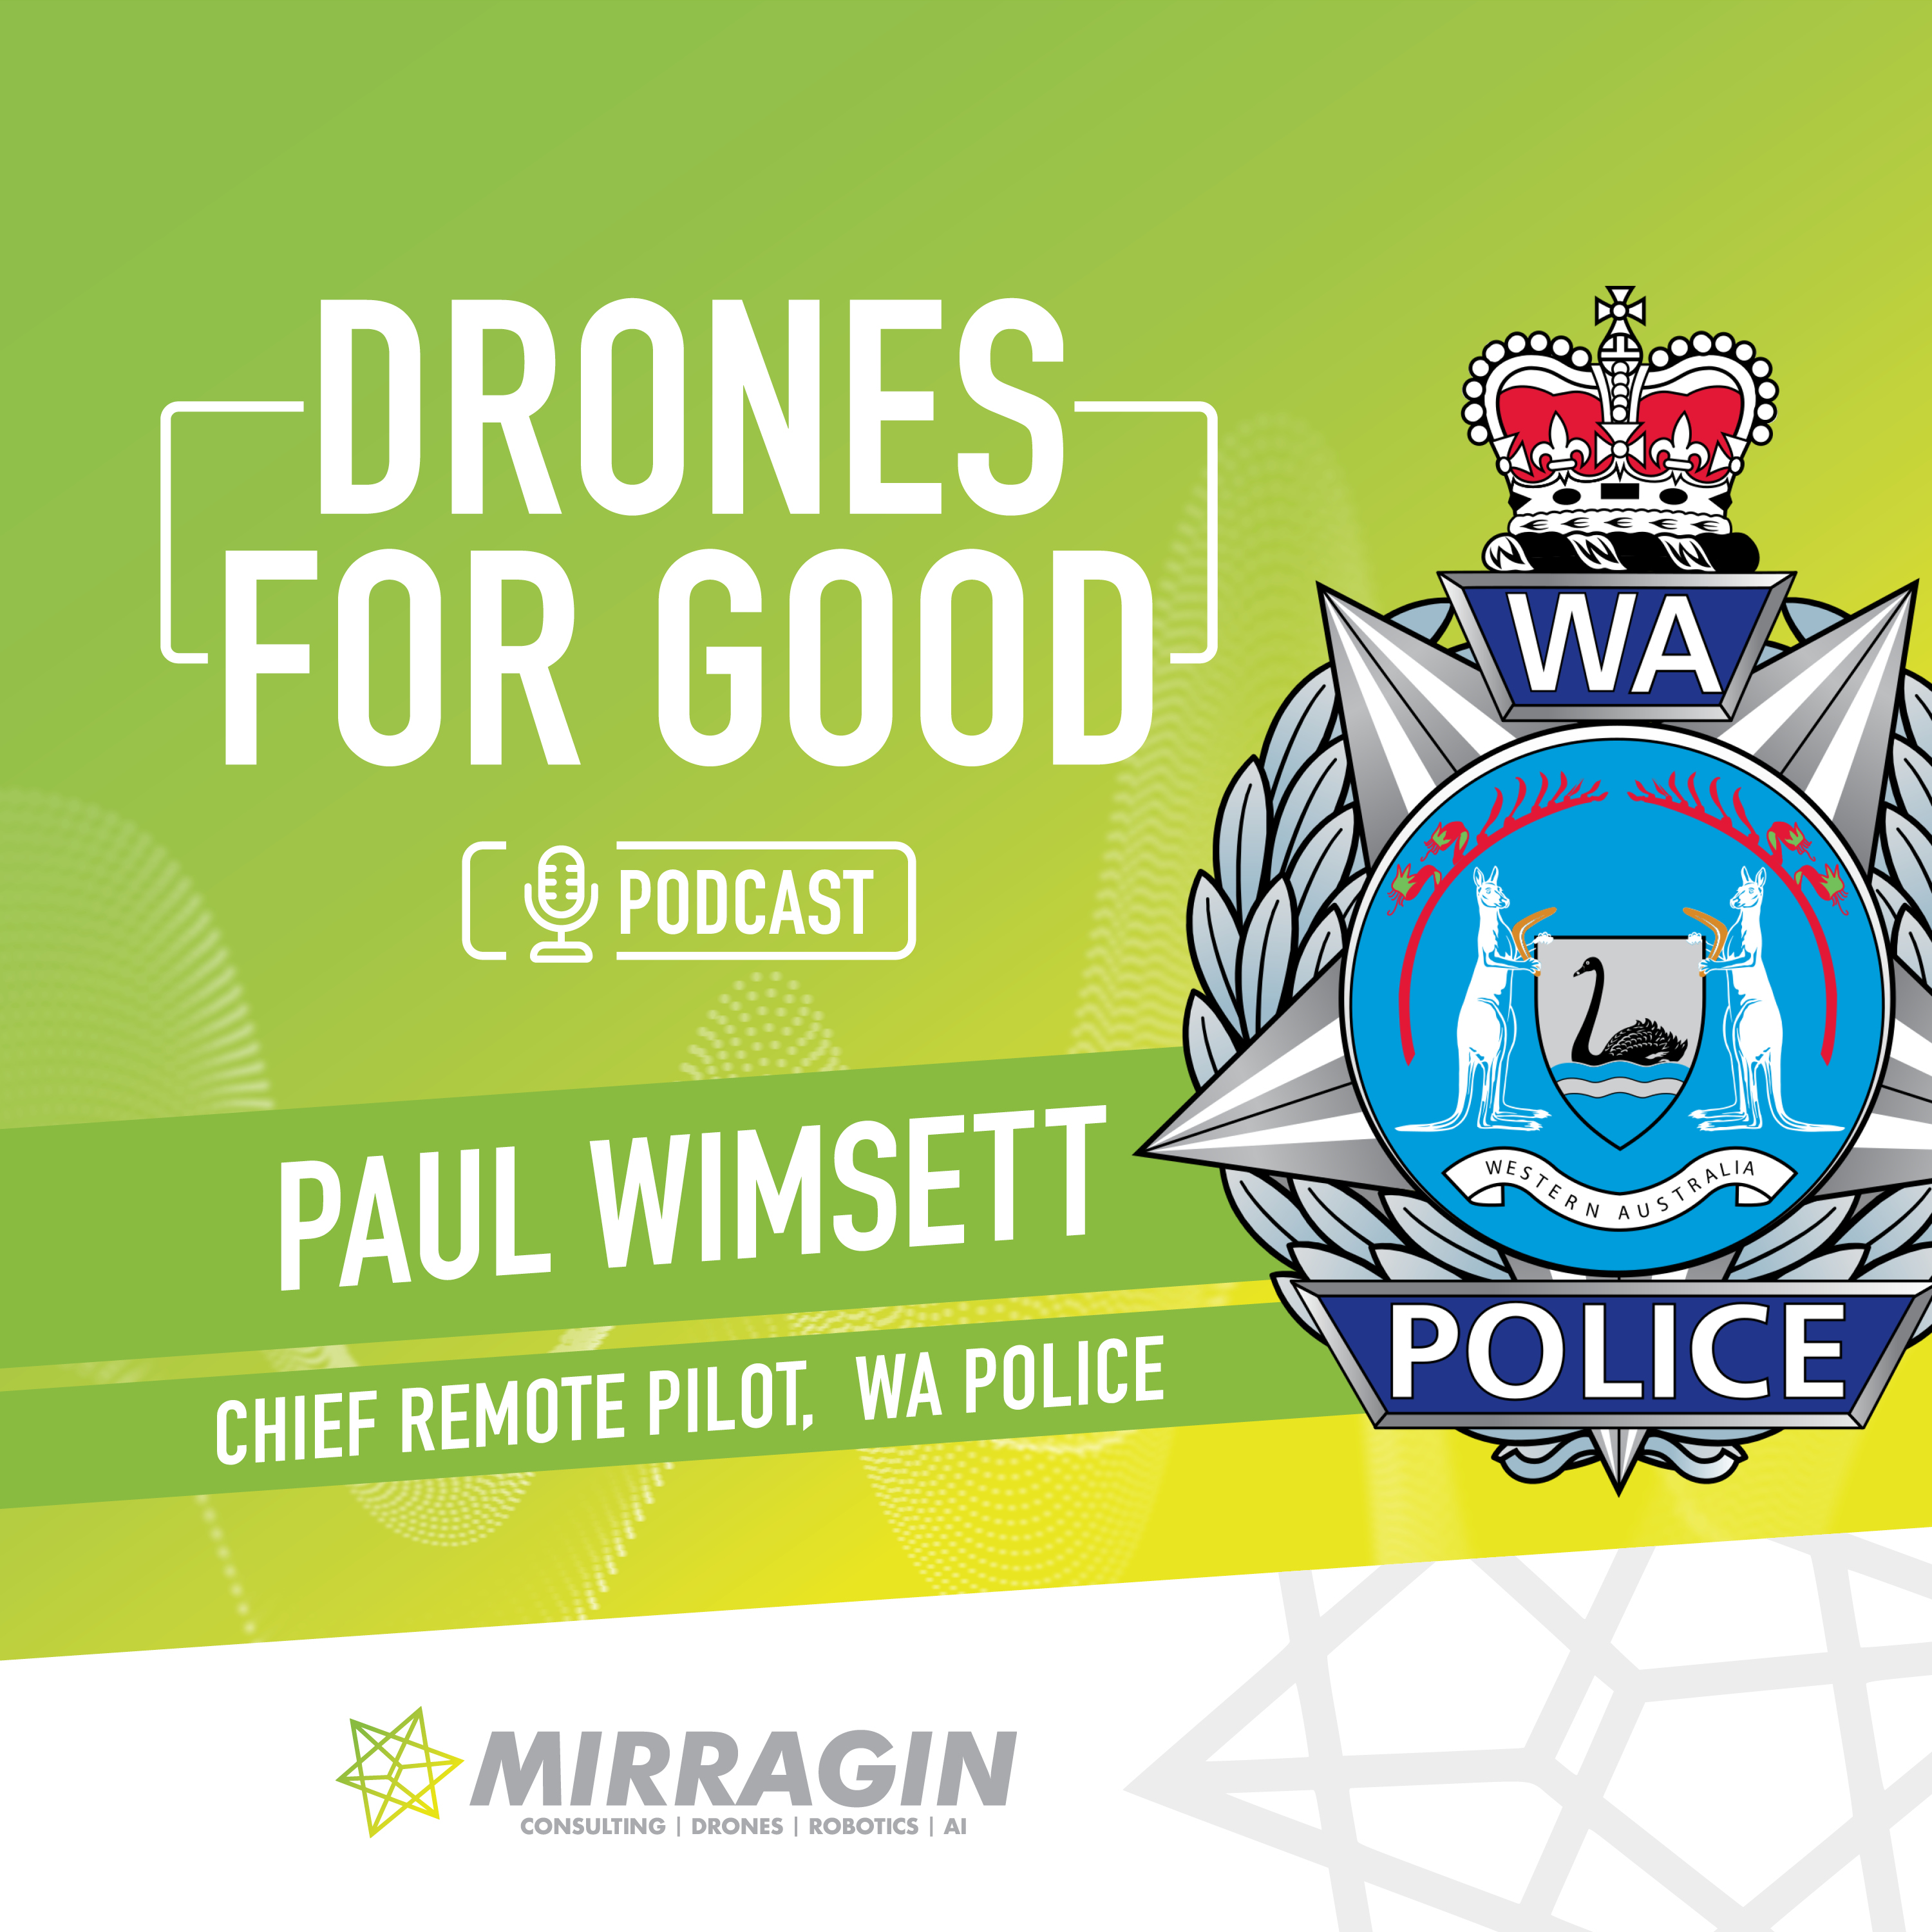 Paul Wimsett - Chief Remote Pilot, Western Australia Police Force